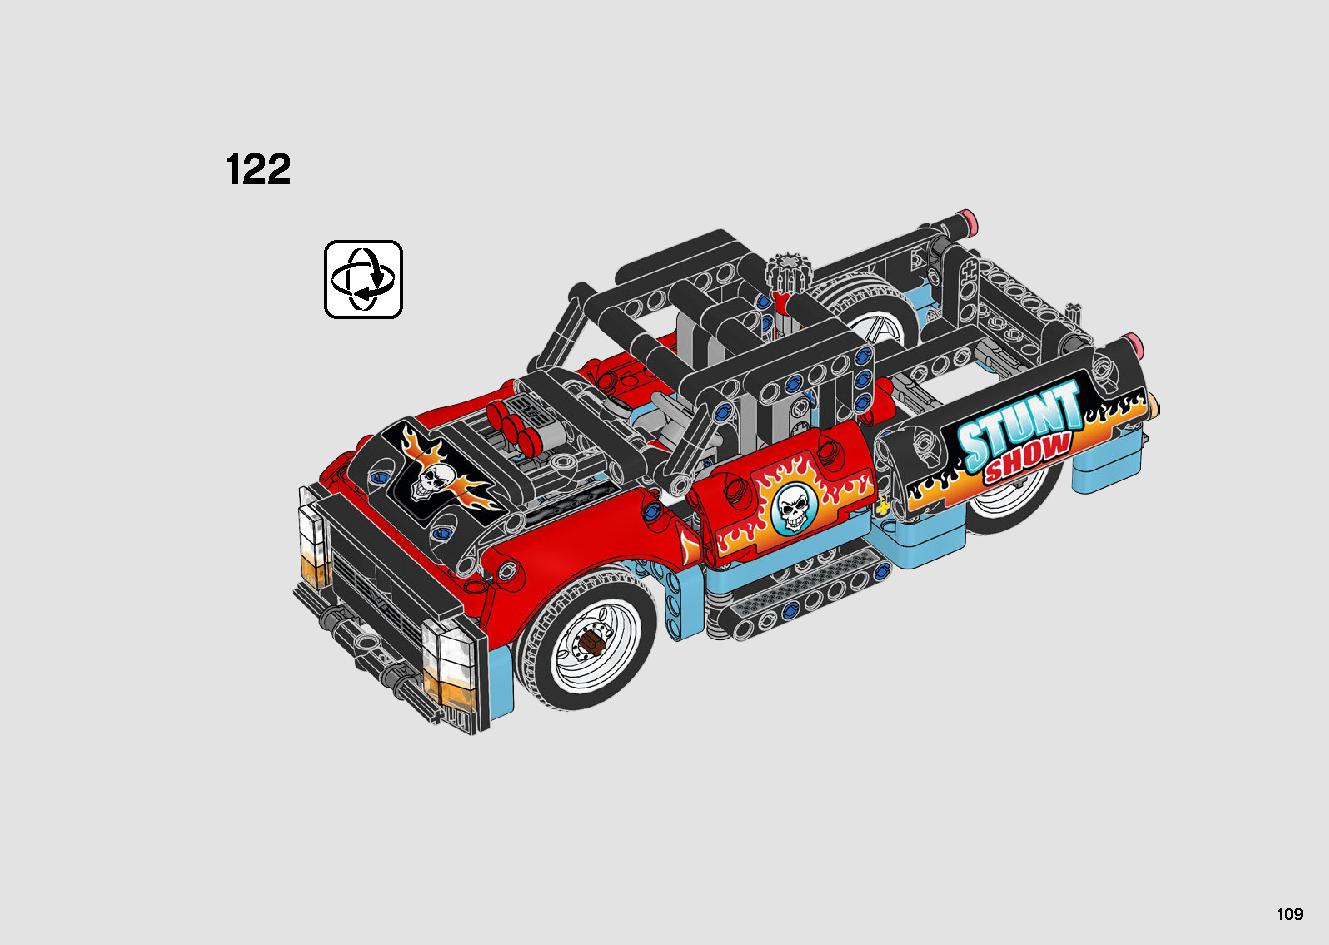 Stunt Show Truck & Bike 42106 LEGO information LEGO instructions 109 page